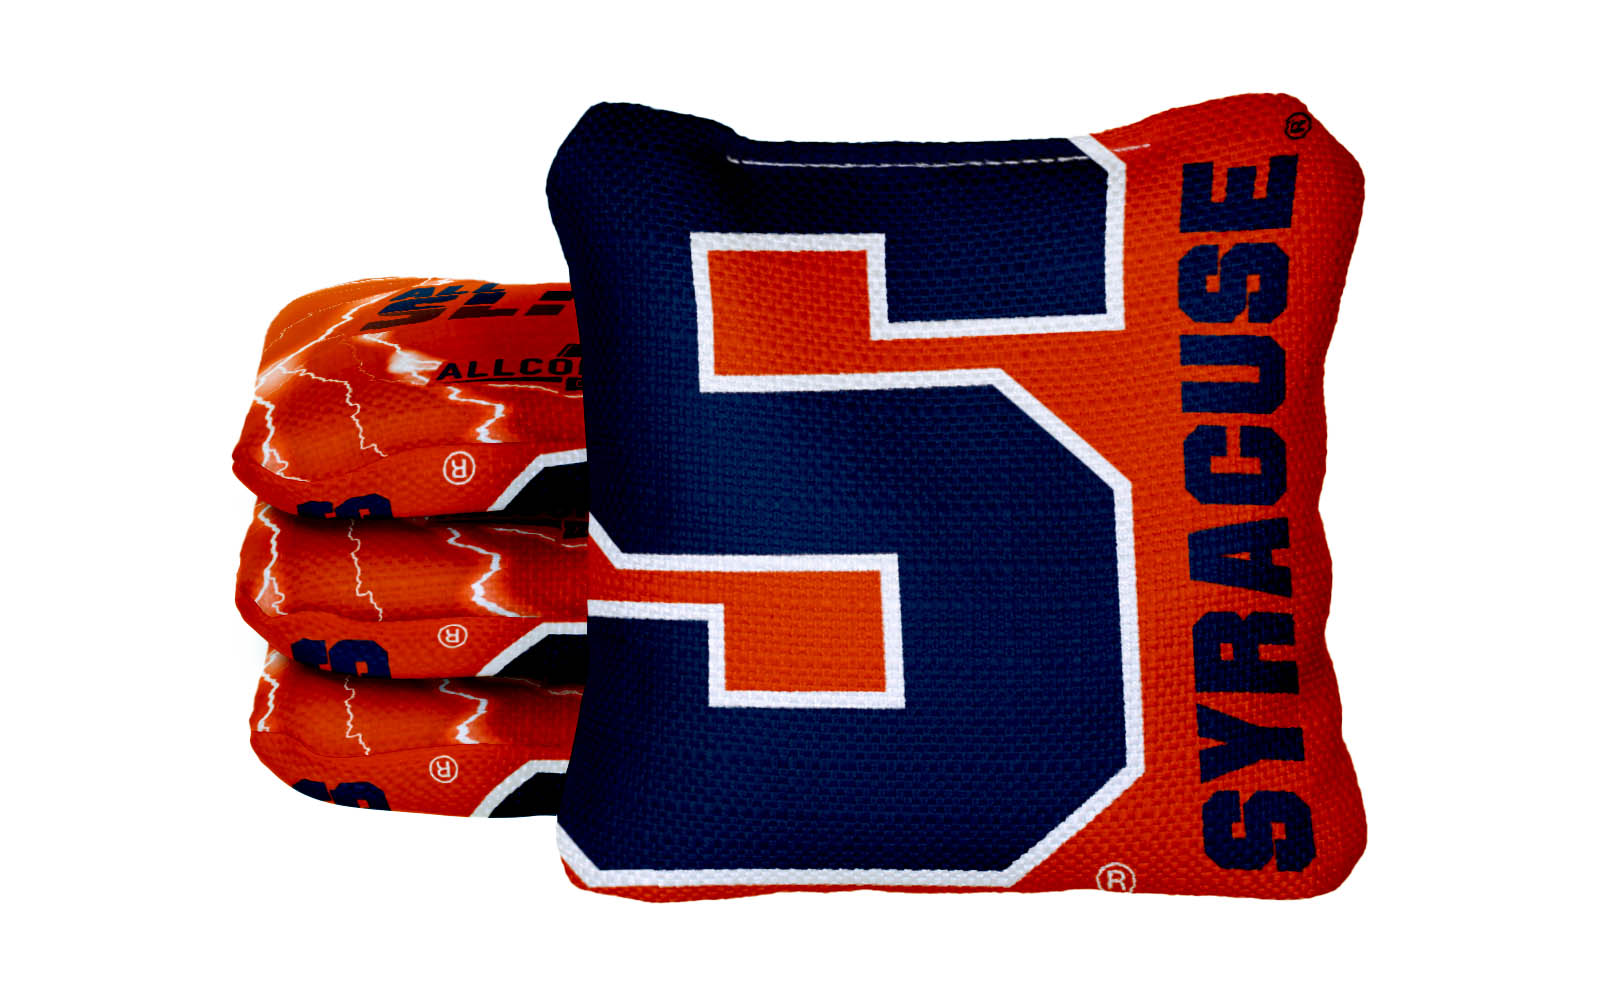 Officially Licensed Collegiate Cornhole Bags - AllCornhole All-Slide 2.0 - Set of 4 - Syracuse University